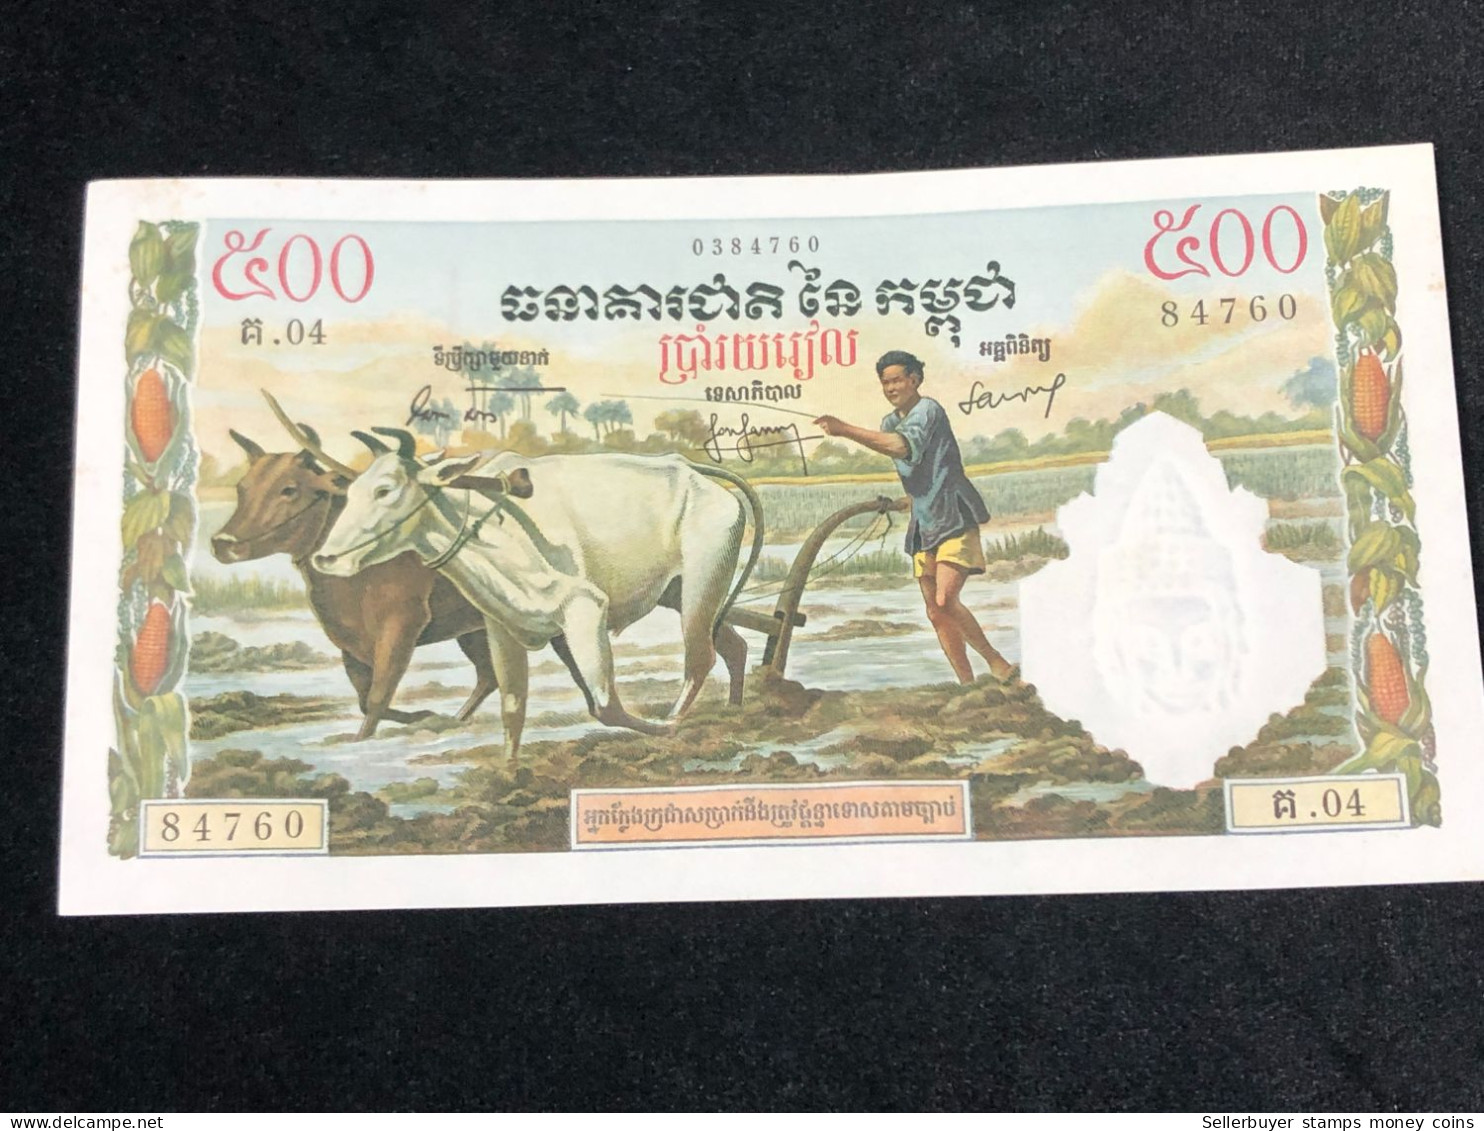 Cambodia Kingdom Banknotes #16B-500 Riels 1956-1 Pcs Aunc Very Rare-number-4760 - Cambodge